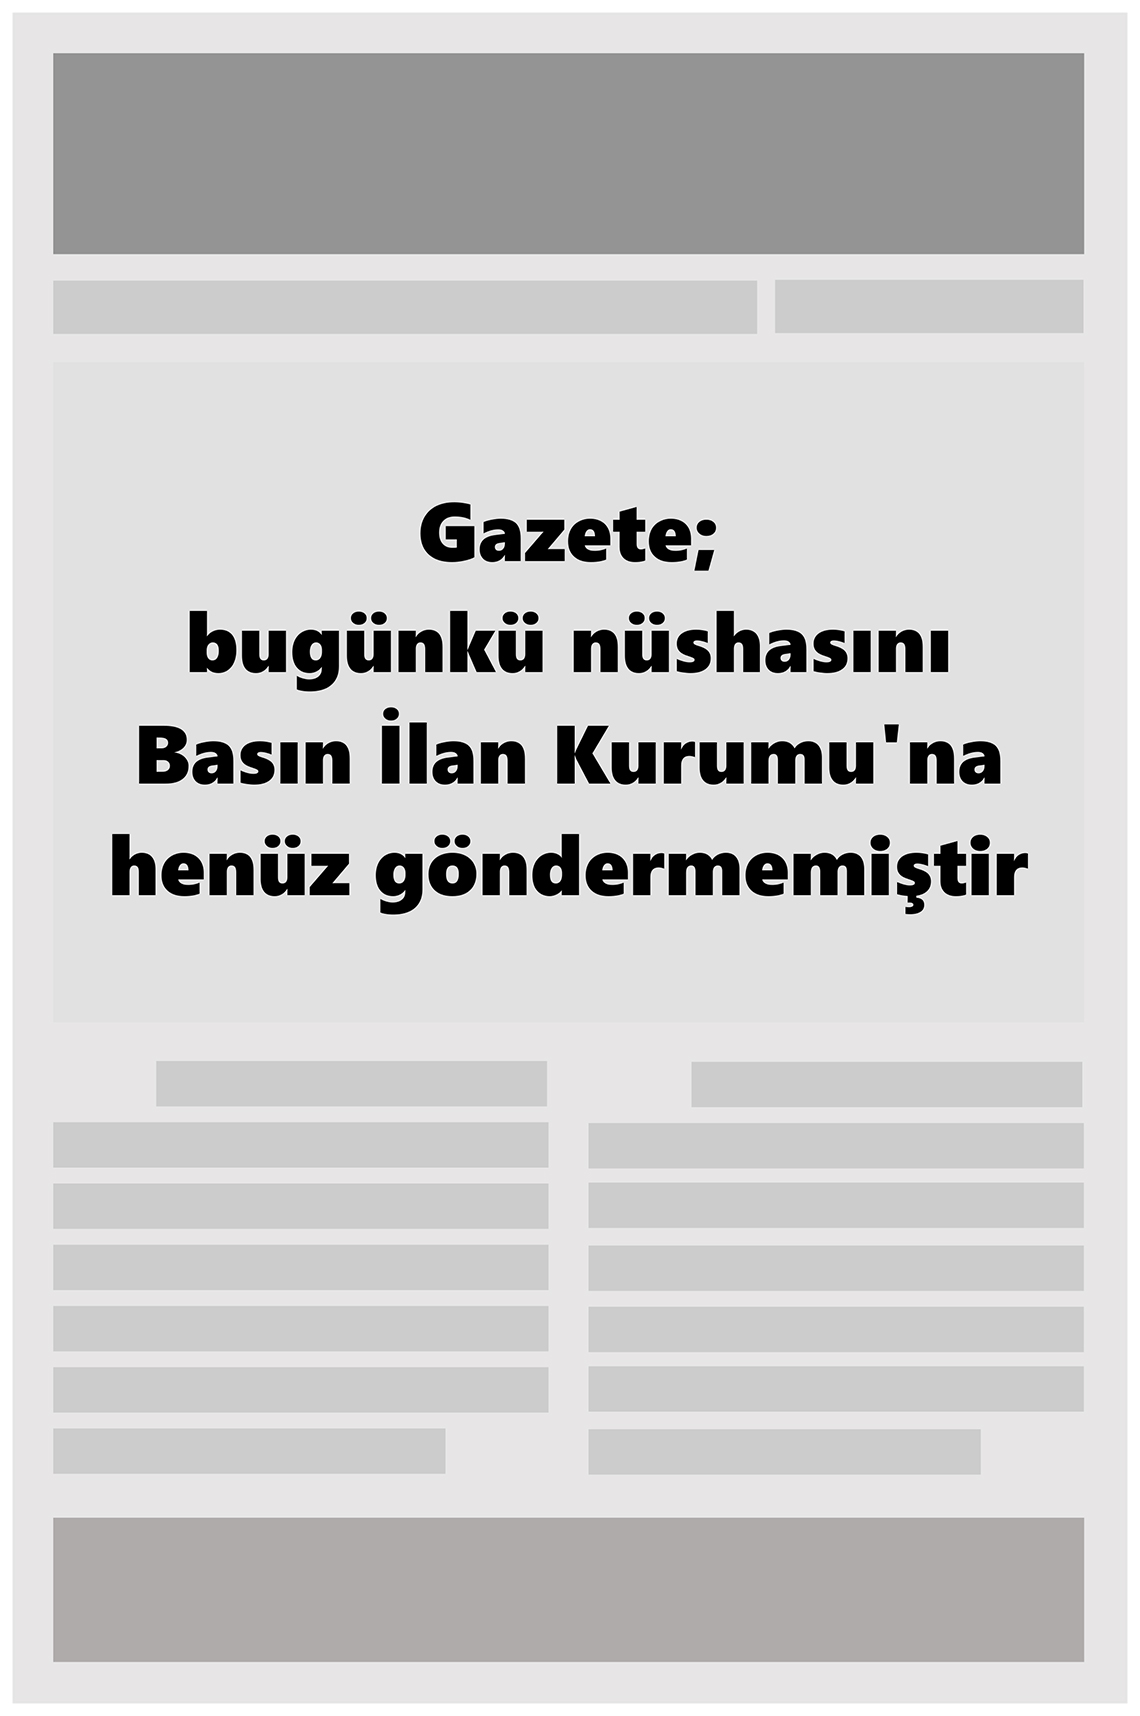 21 Ağustos 2022 Hizmet Gazete Manşeti